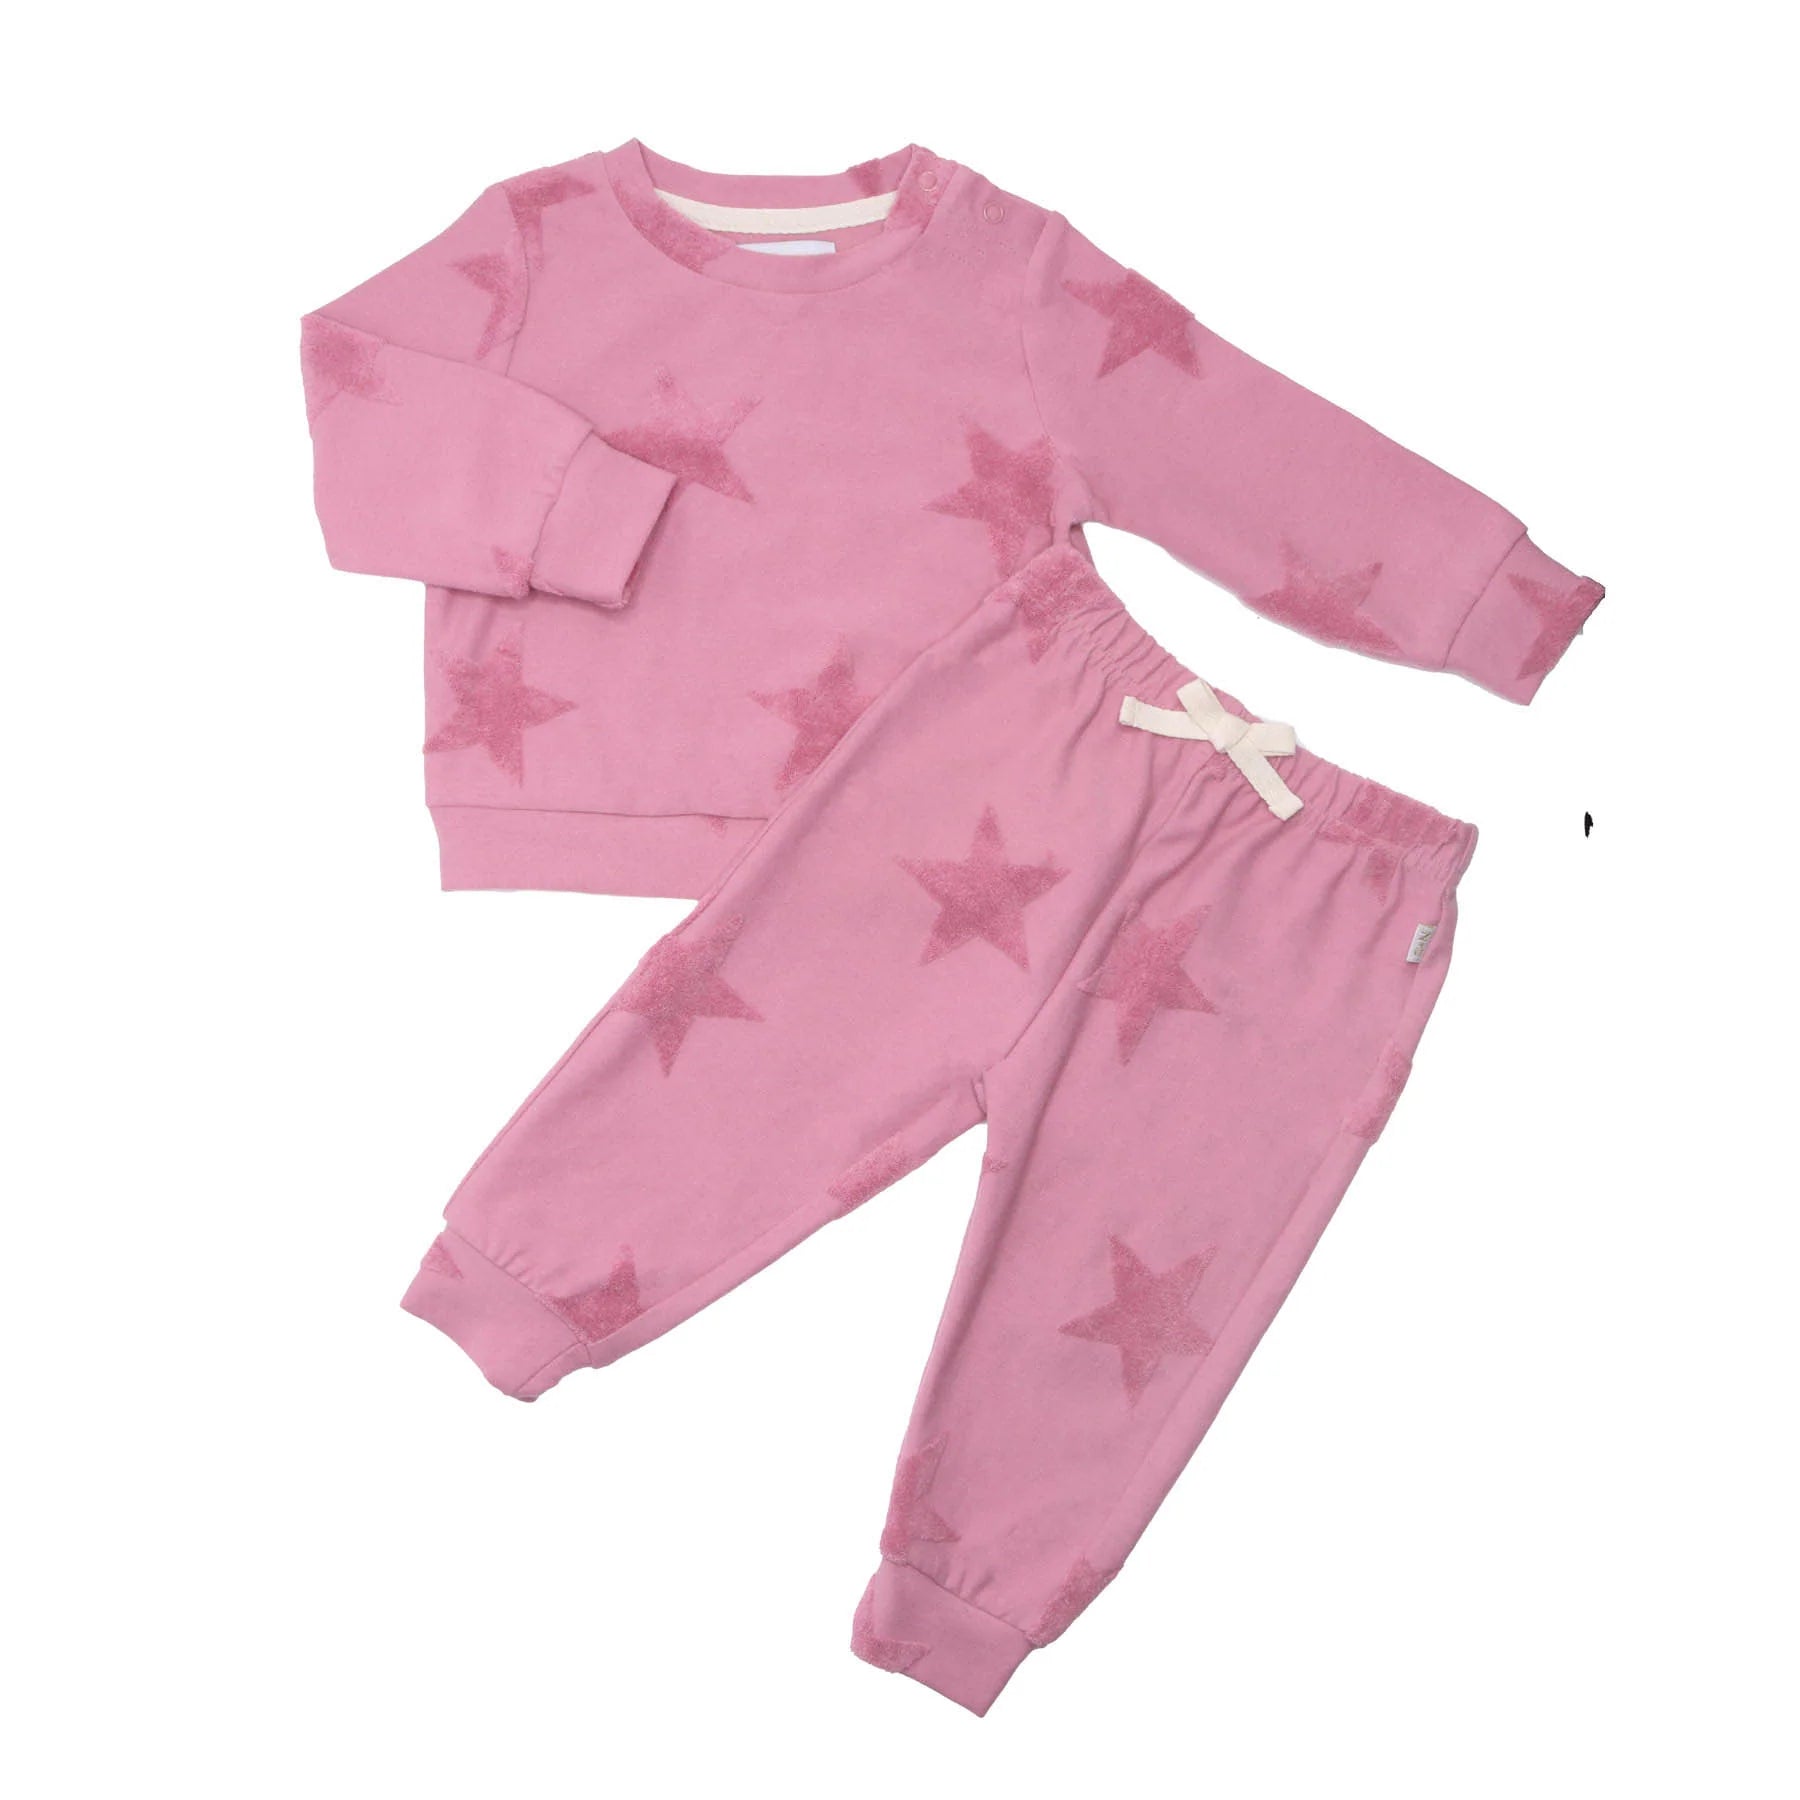 Baby Signature Star Reid Set in Pink